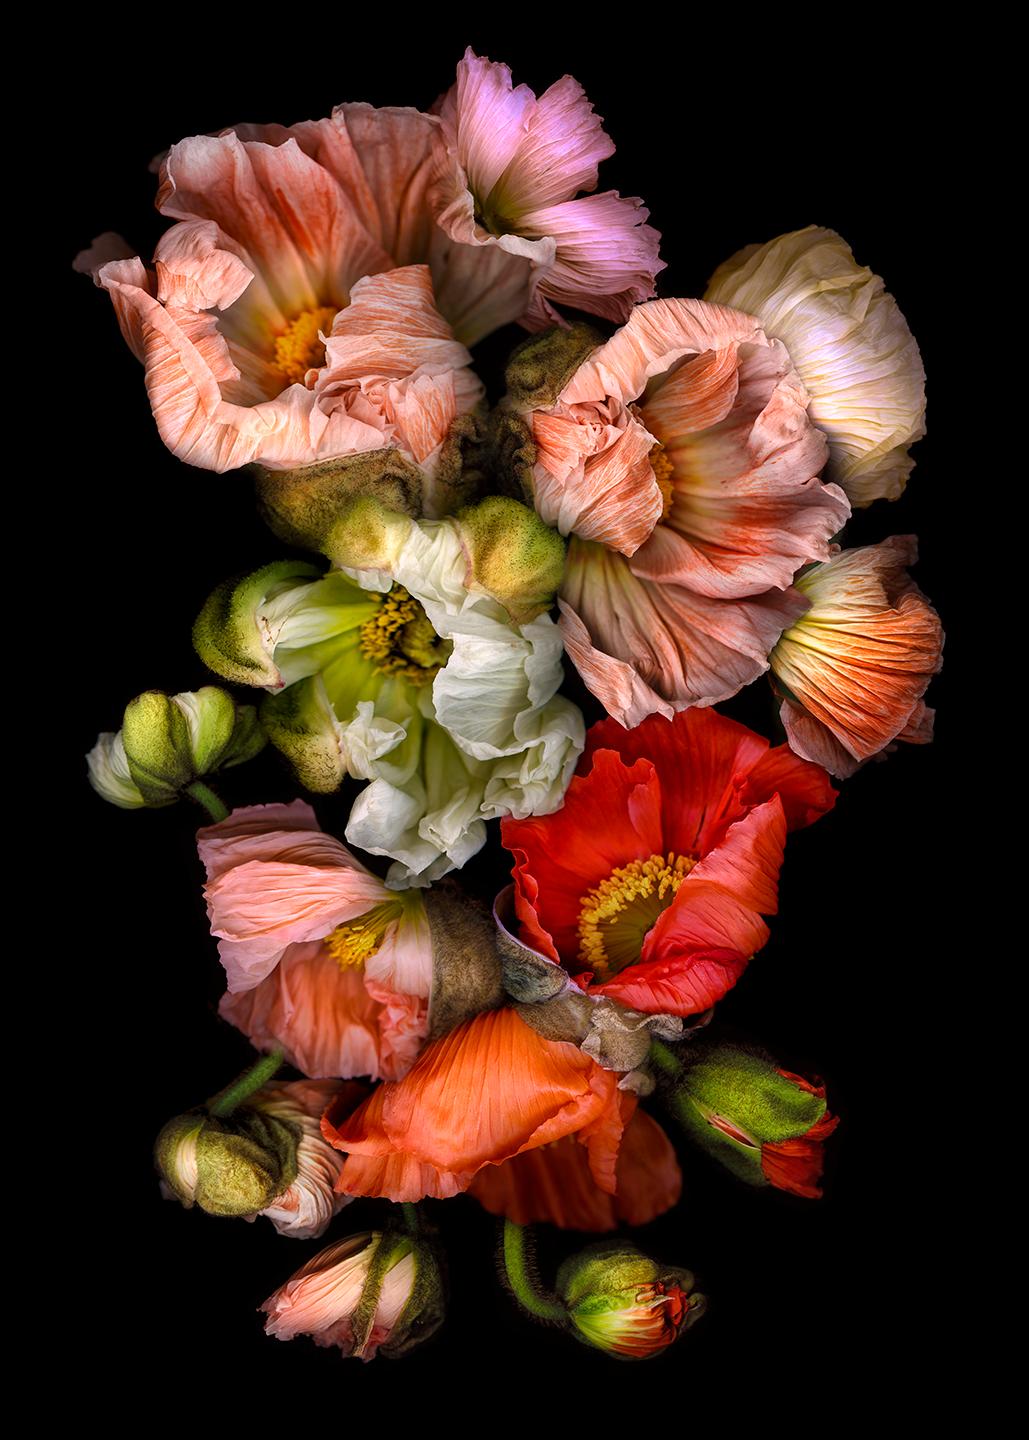 Allan Forsyth Color Photograph - Black Furs, Dramatic Photography, Vibrant Floral Artwork, Chromagenic Prints